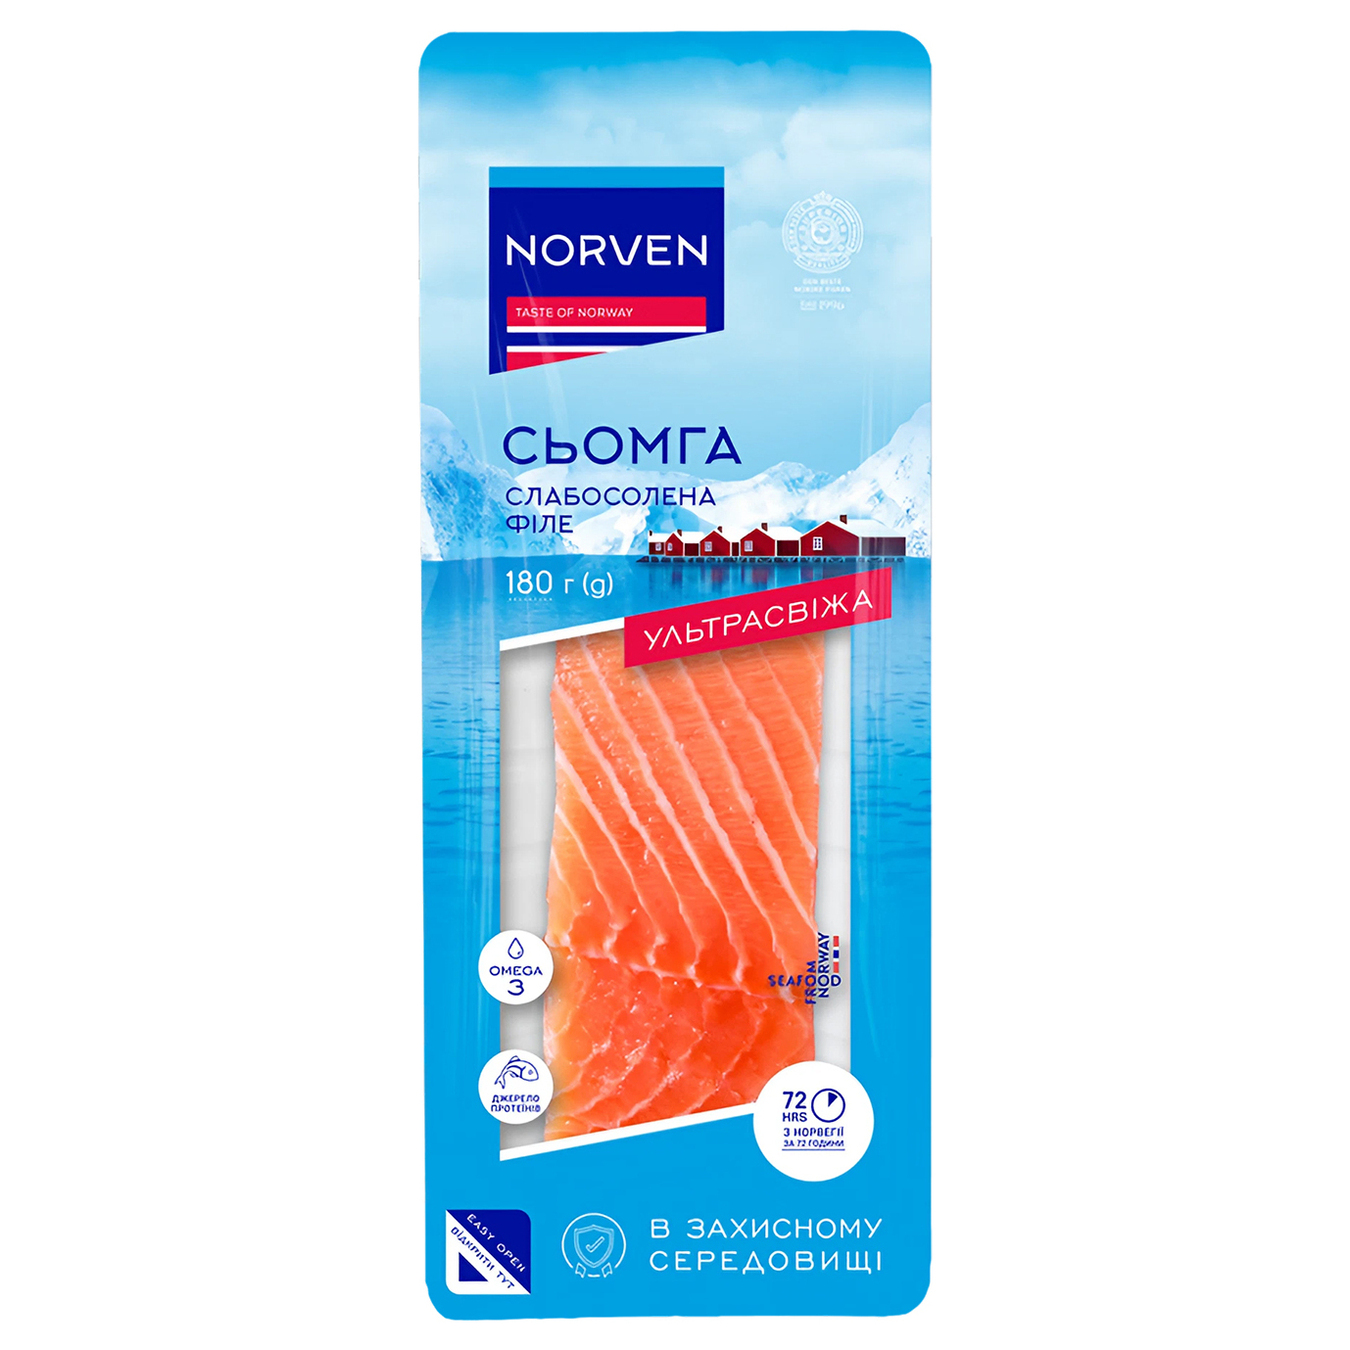 Norven Lightly Salted Salmon Fillet Piece 180g